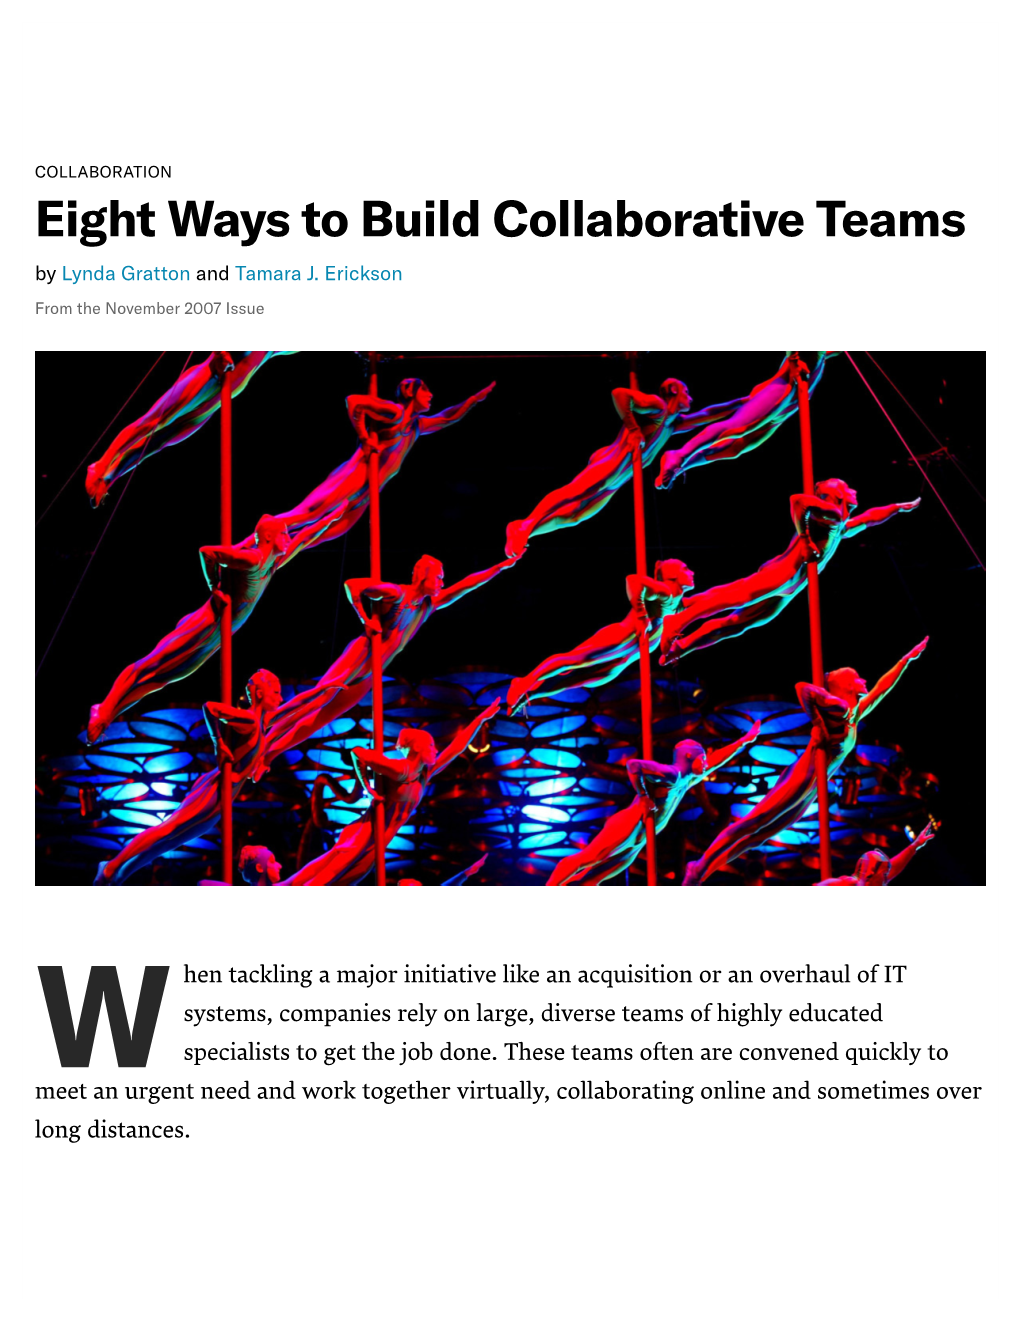 Eight Ways to Build Collaborative Teams by Lynda Gratton and Tamara J